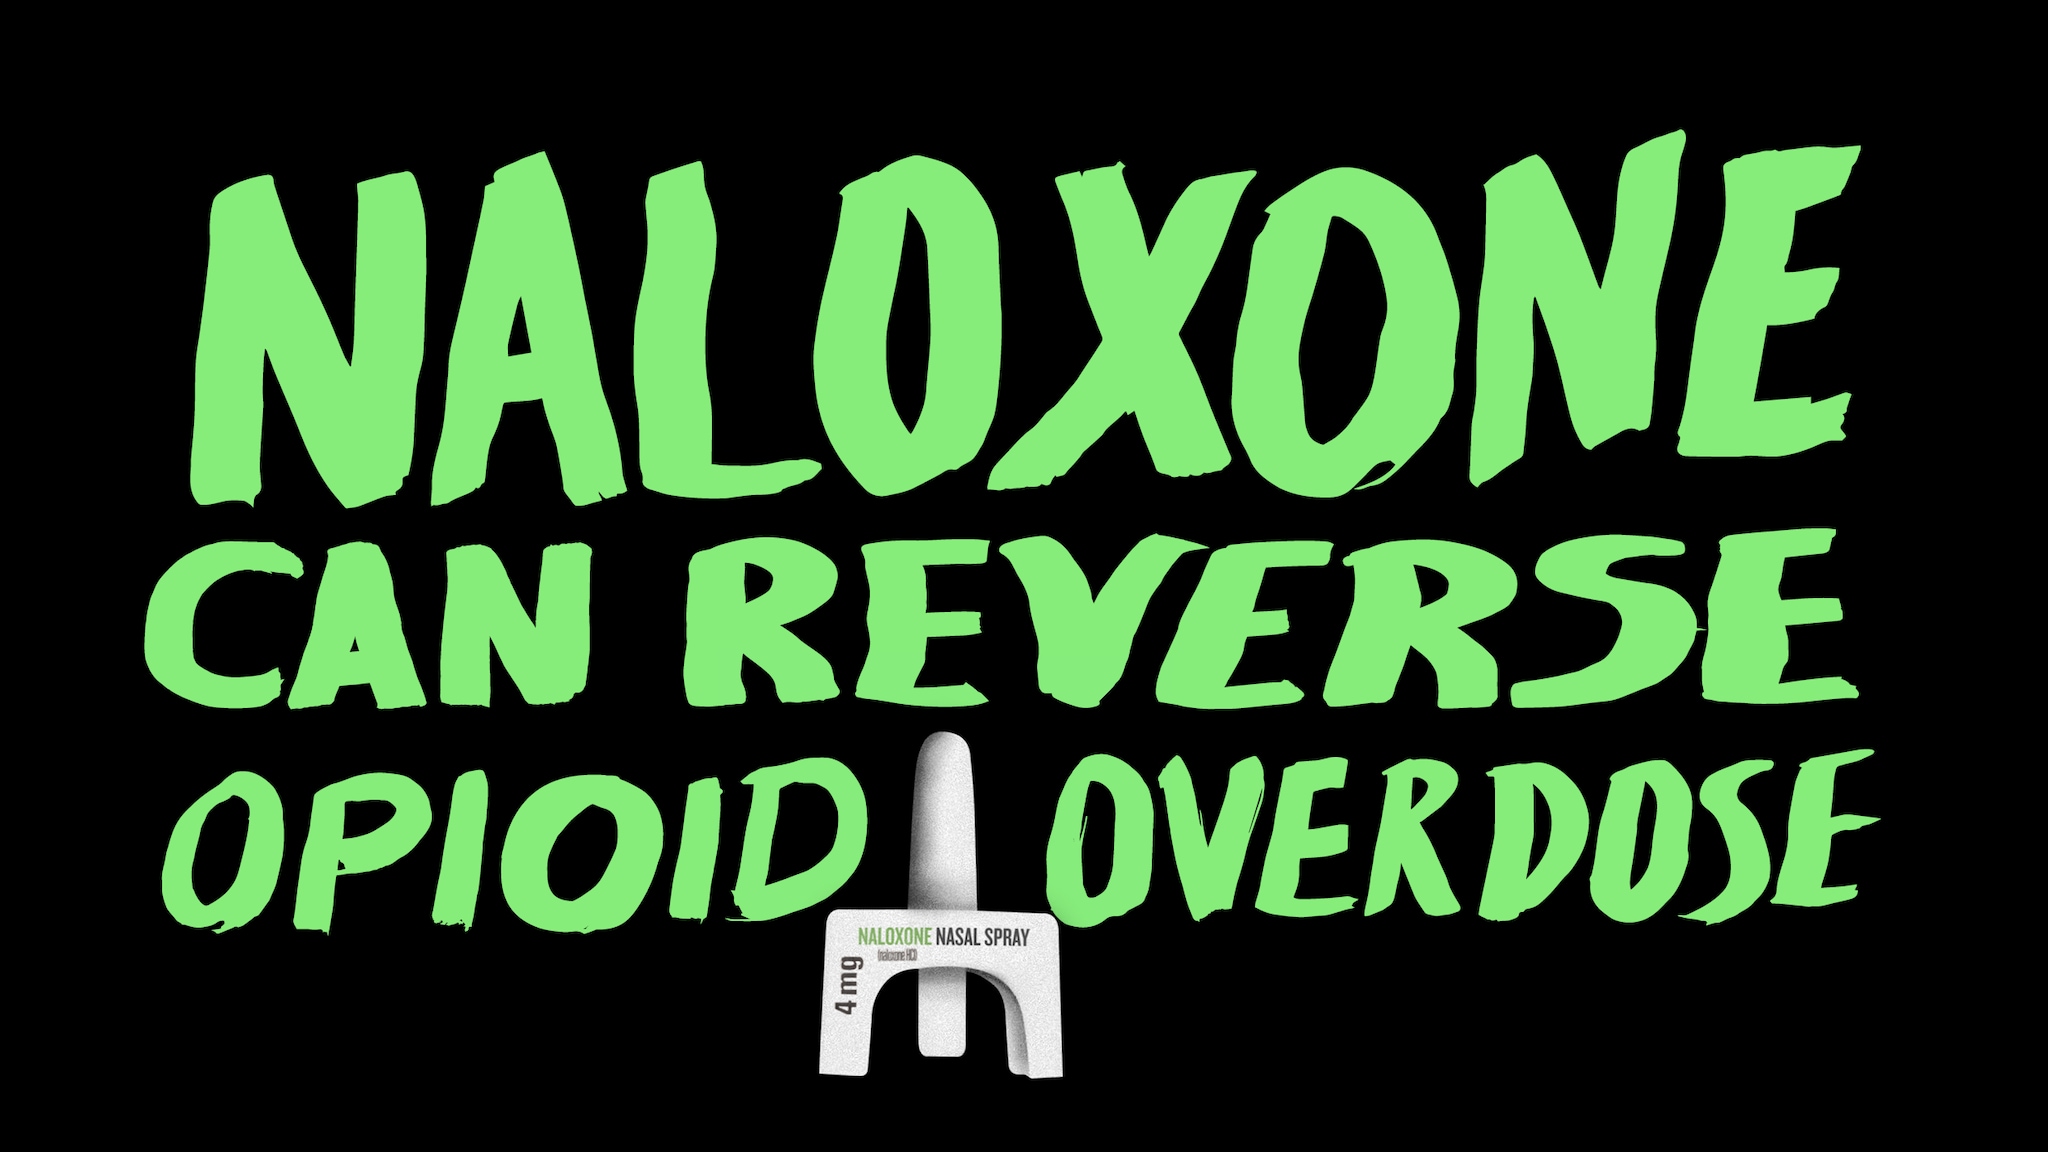 Naloxone can reverse opioid overdose.